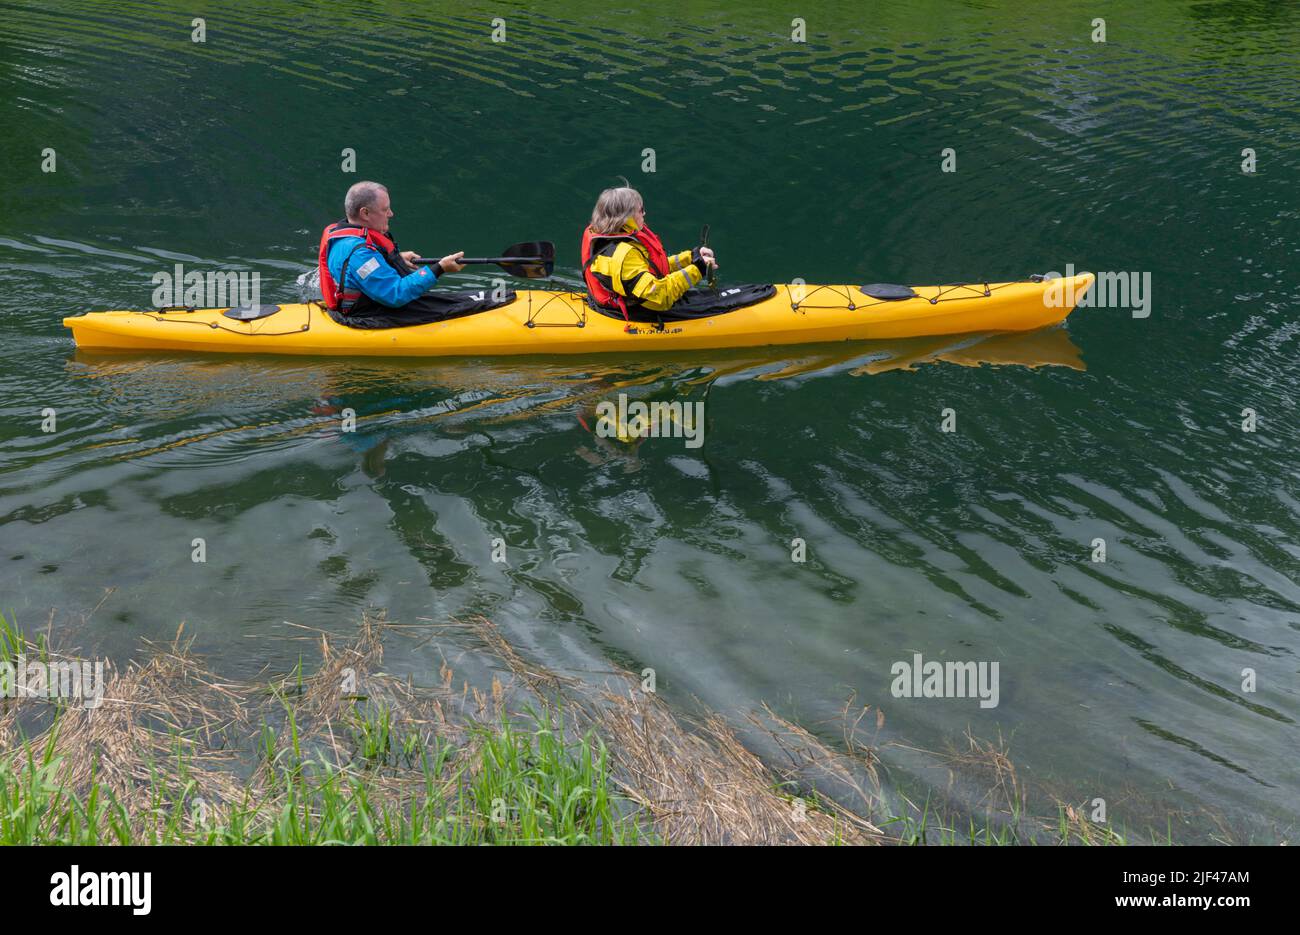 Tourists in yellow kayaks, Norwegian Fjords, Olden, Norway Stock Photo